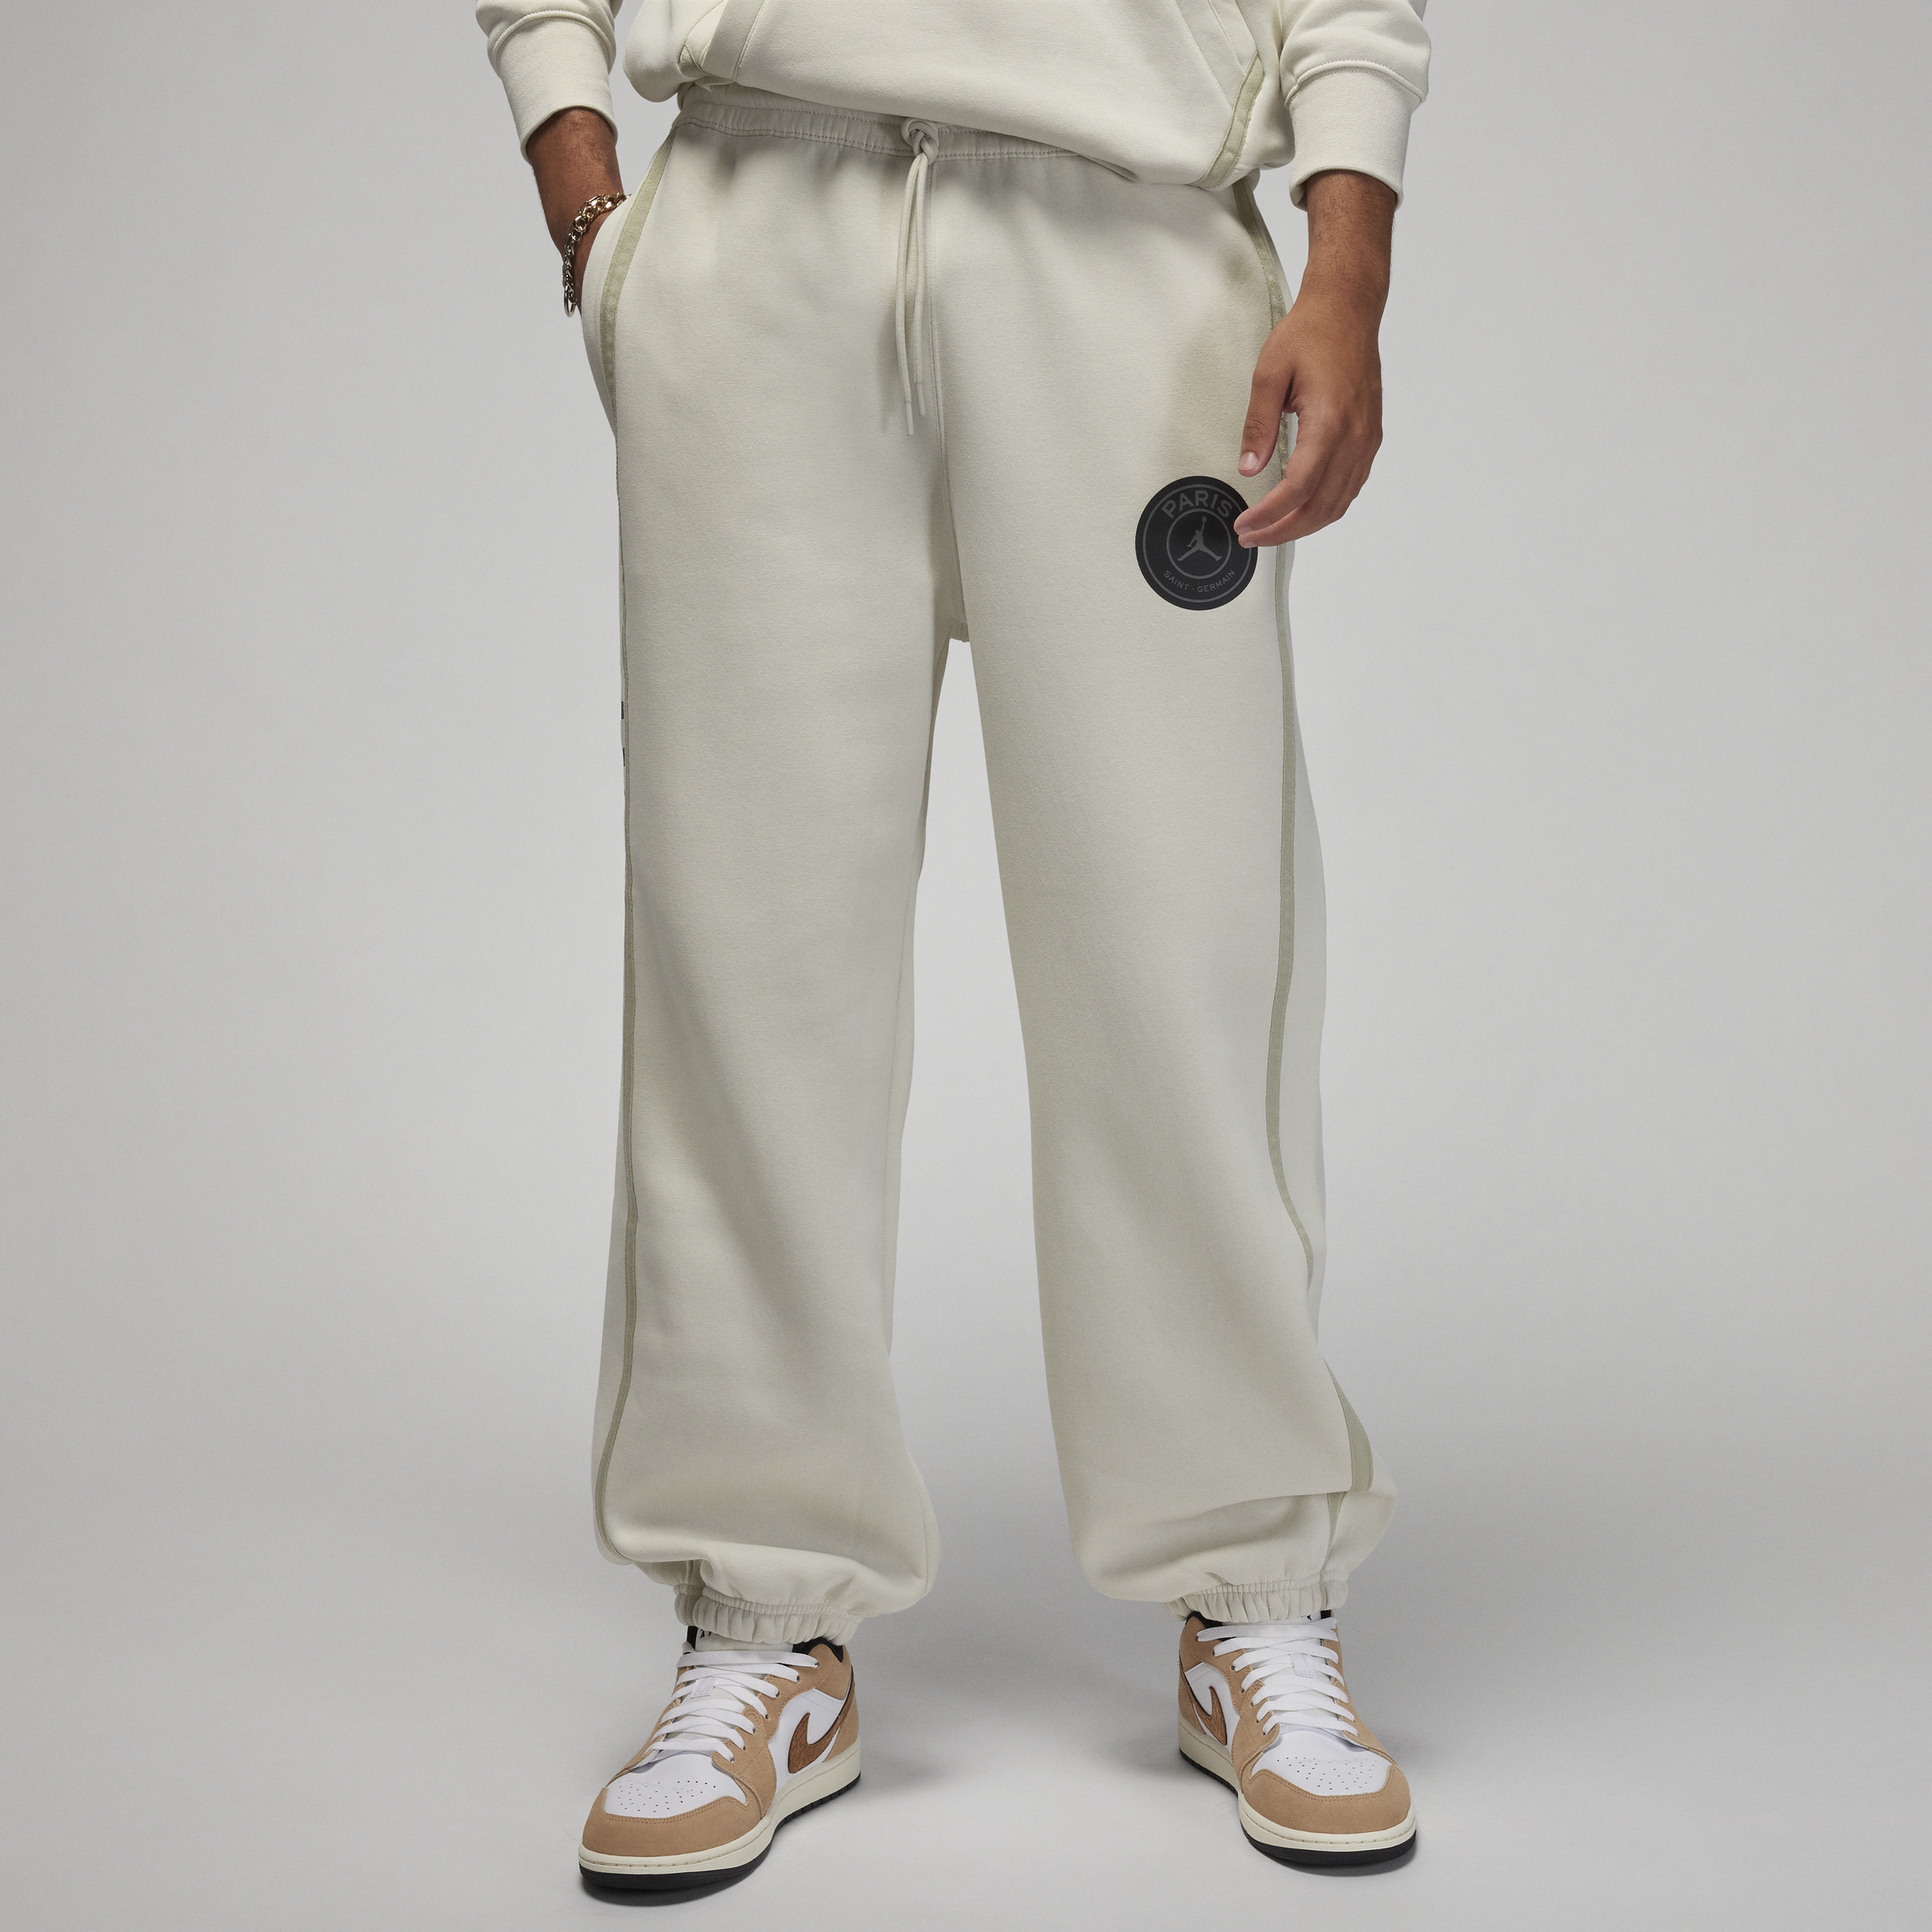 Nike Paris Saint-Germain Pantalón de tejido Fleece - Hombre - Gris